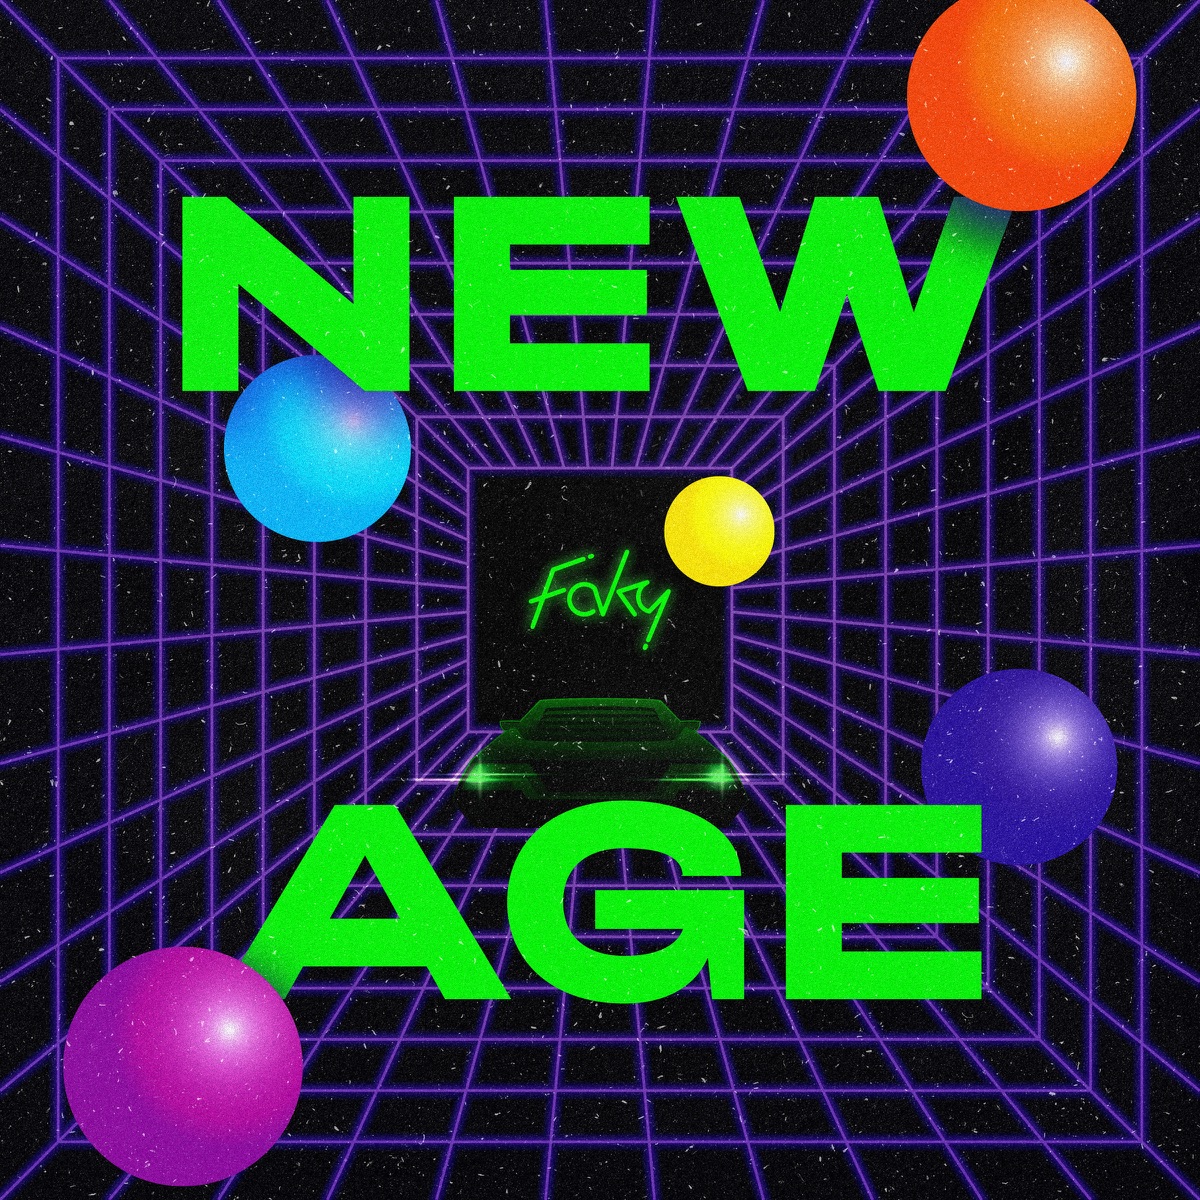 『FAKY - NEW AGE 歌詞』収録の『NEW AGE』ジャケット